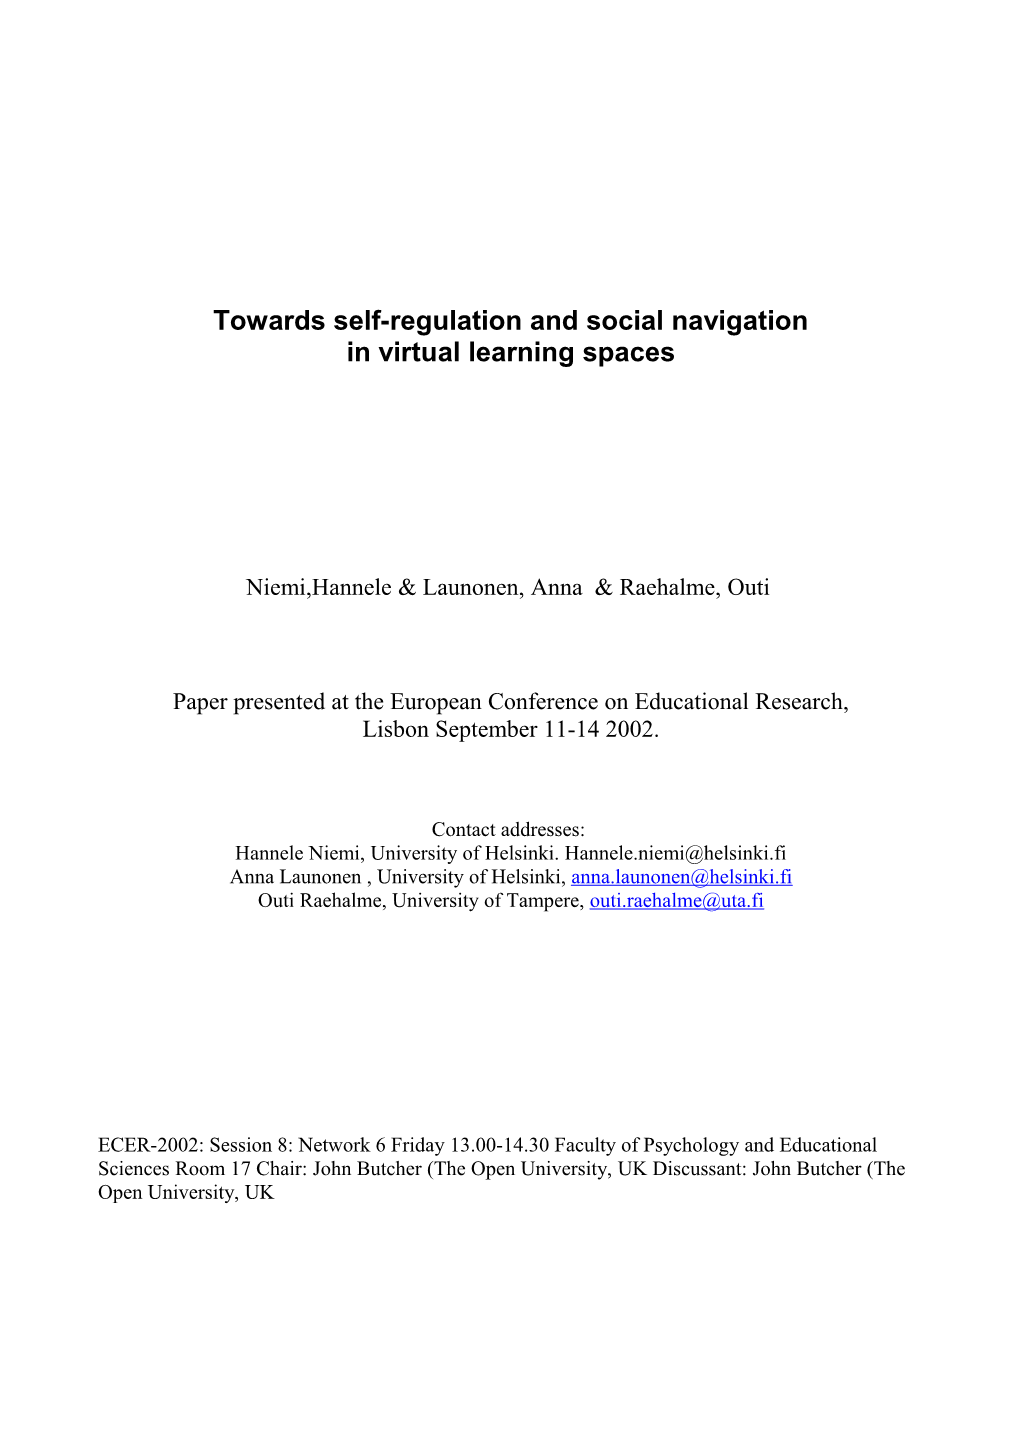 Towards Self-Regulation and Social Navigation